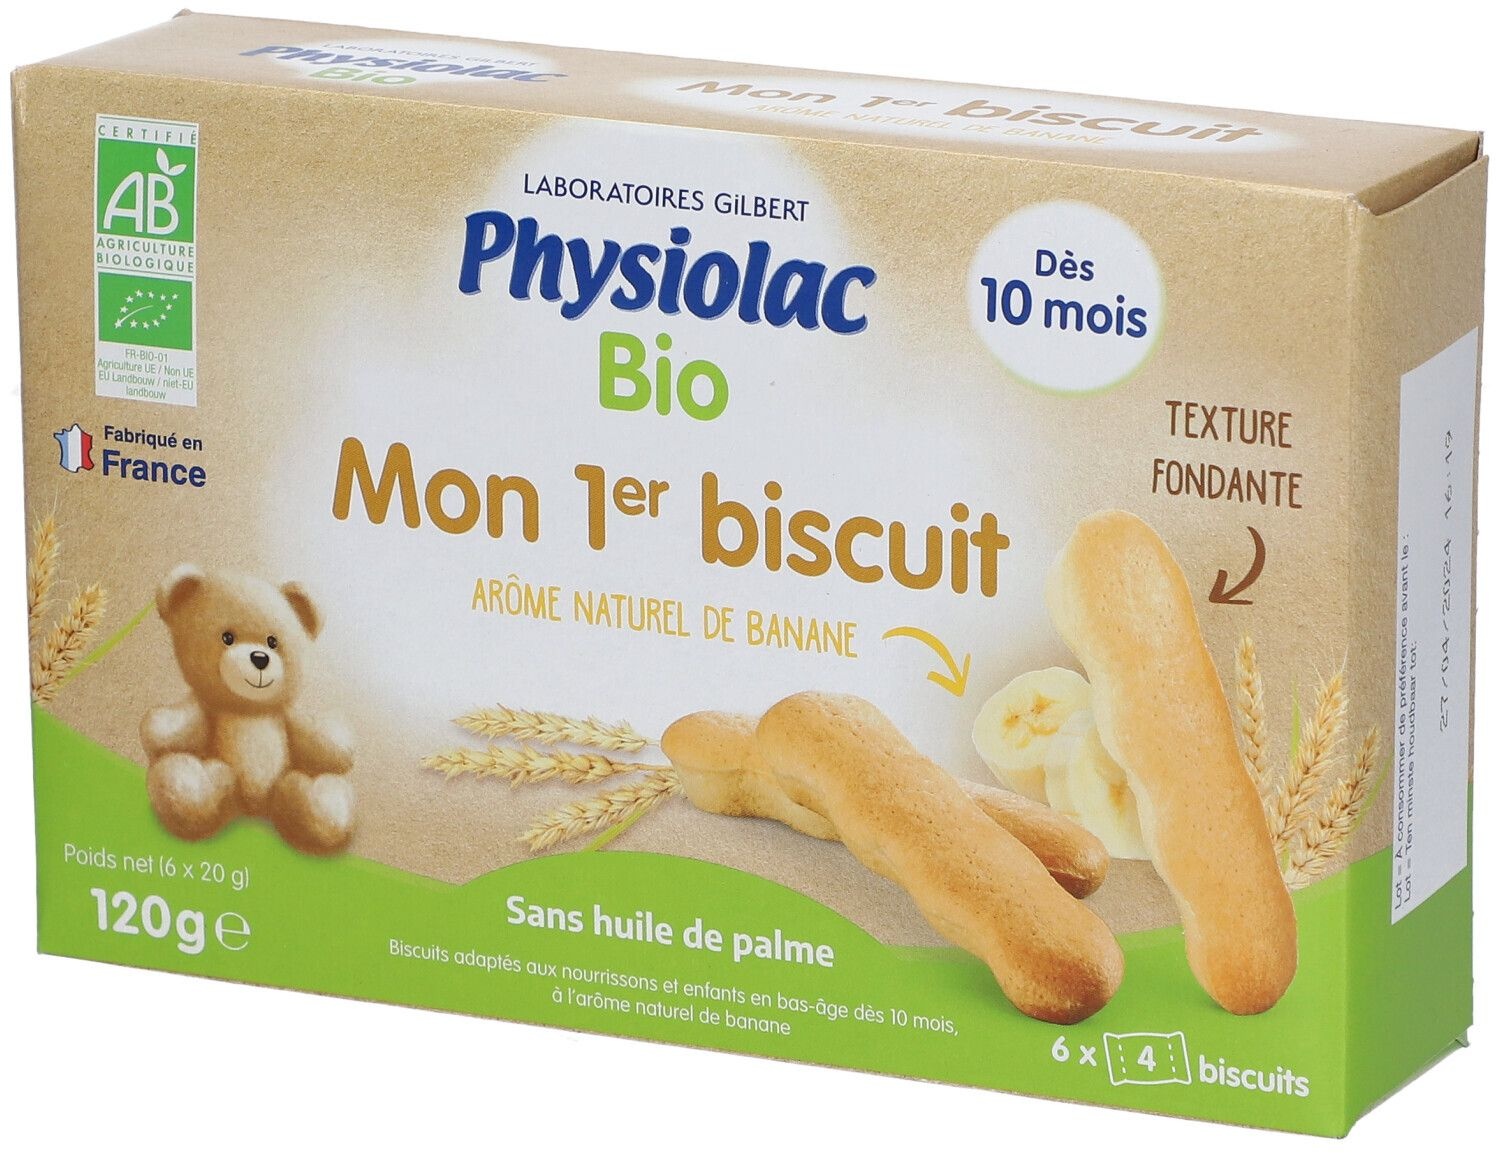 Physiolac Bio Mon 1er Biscuit Banane Dès 10 mois 24 Snack